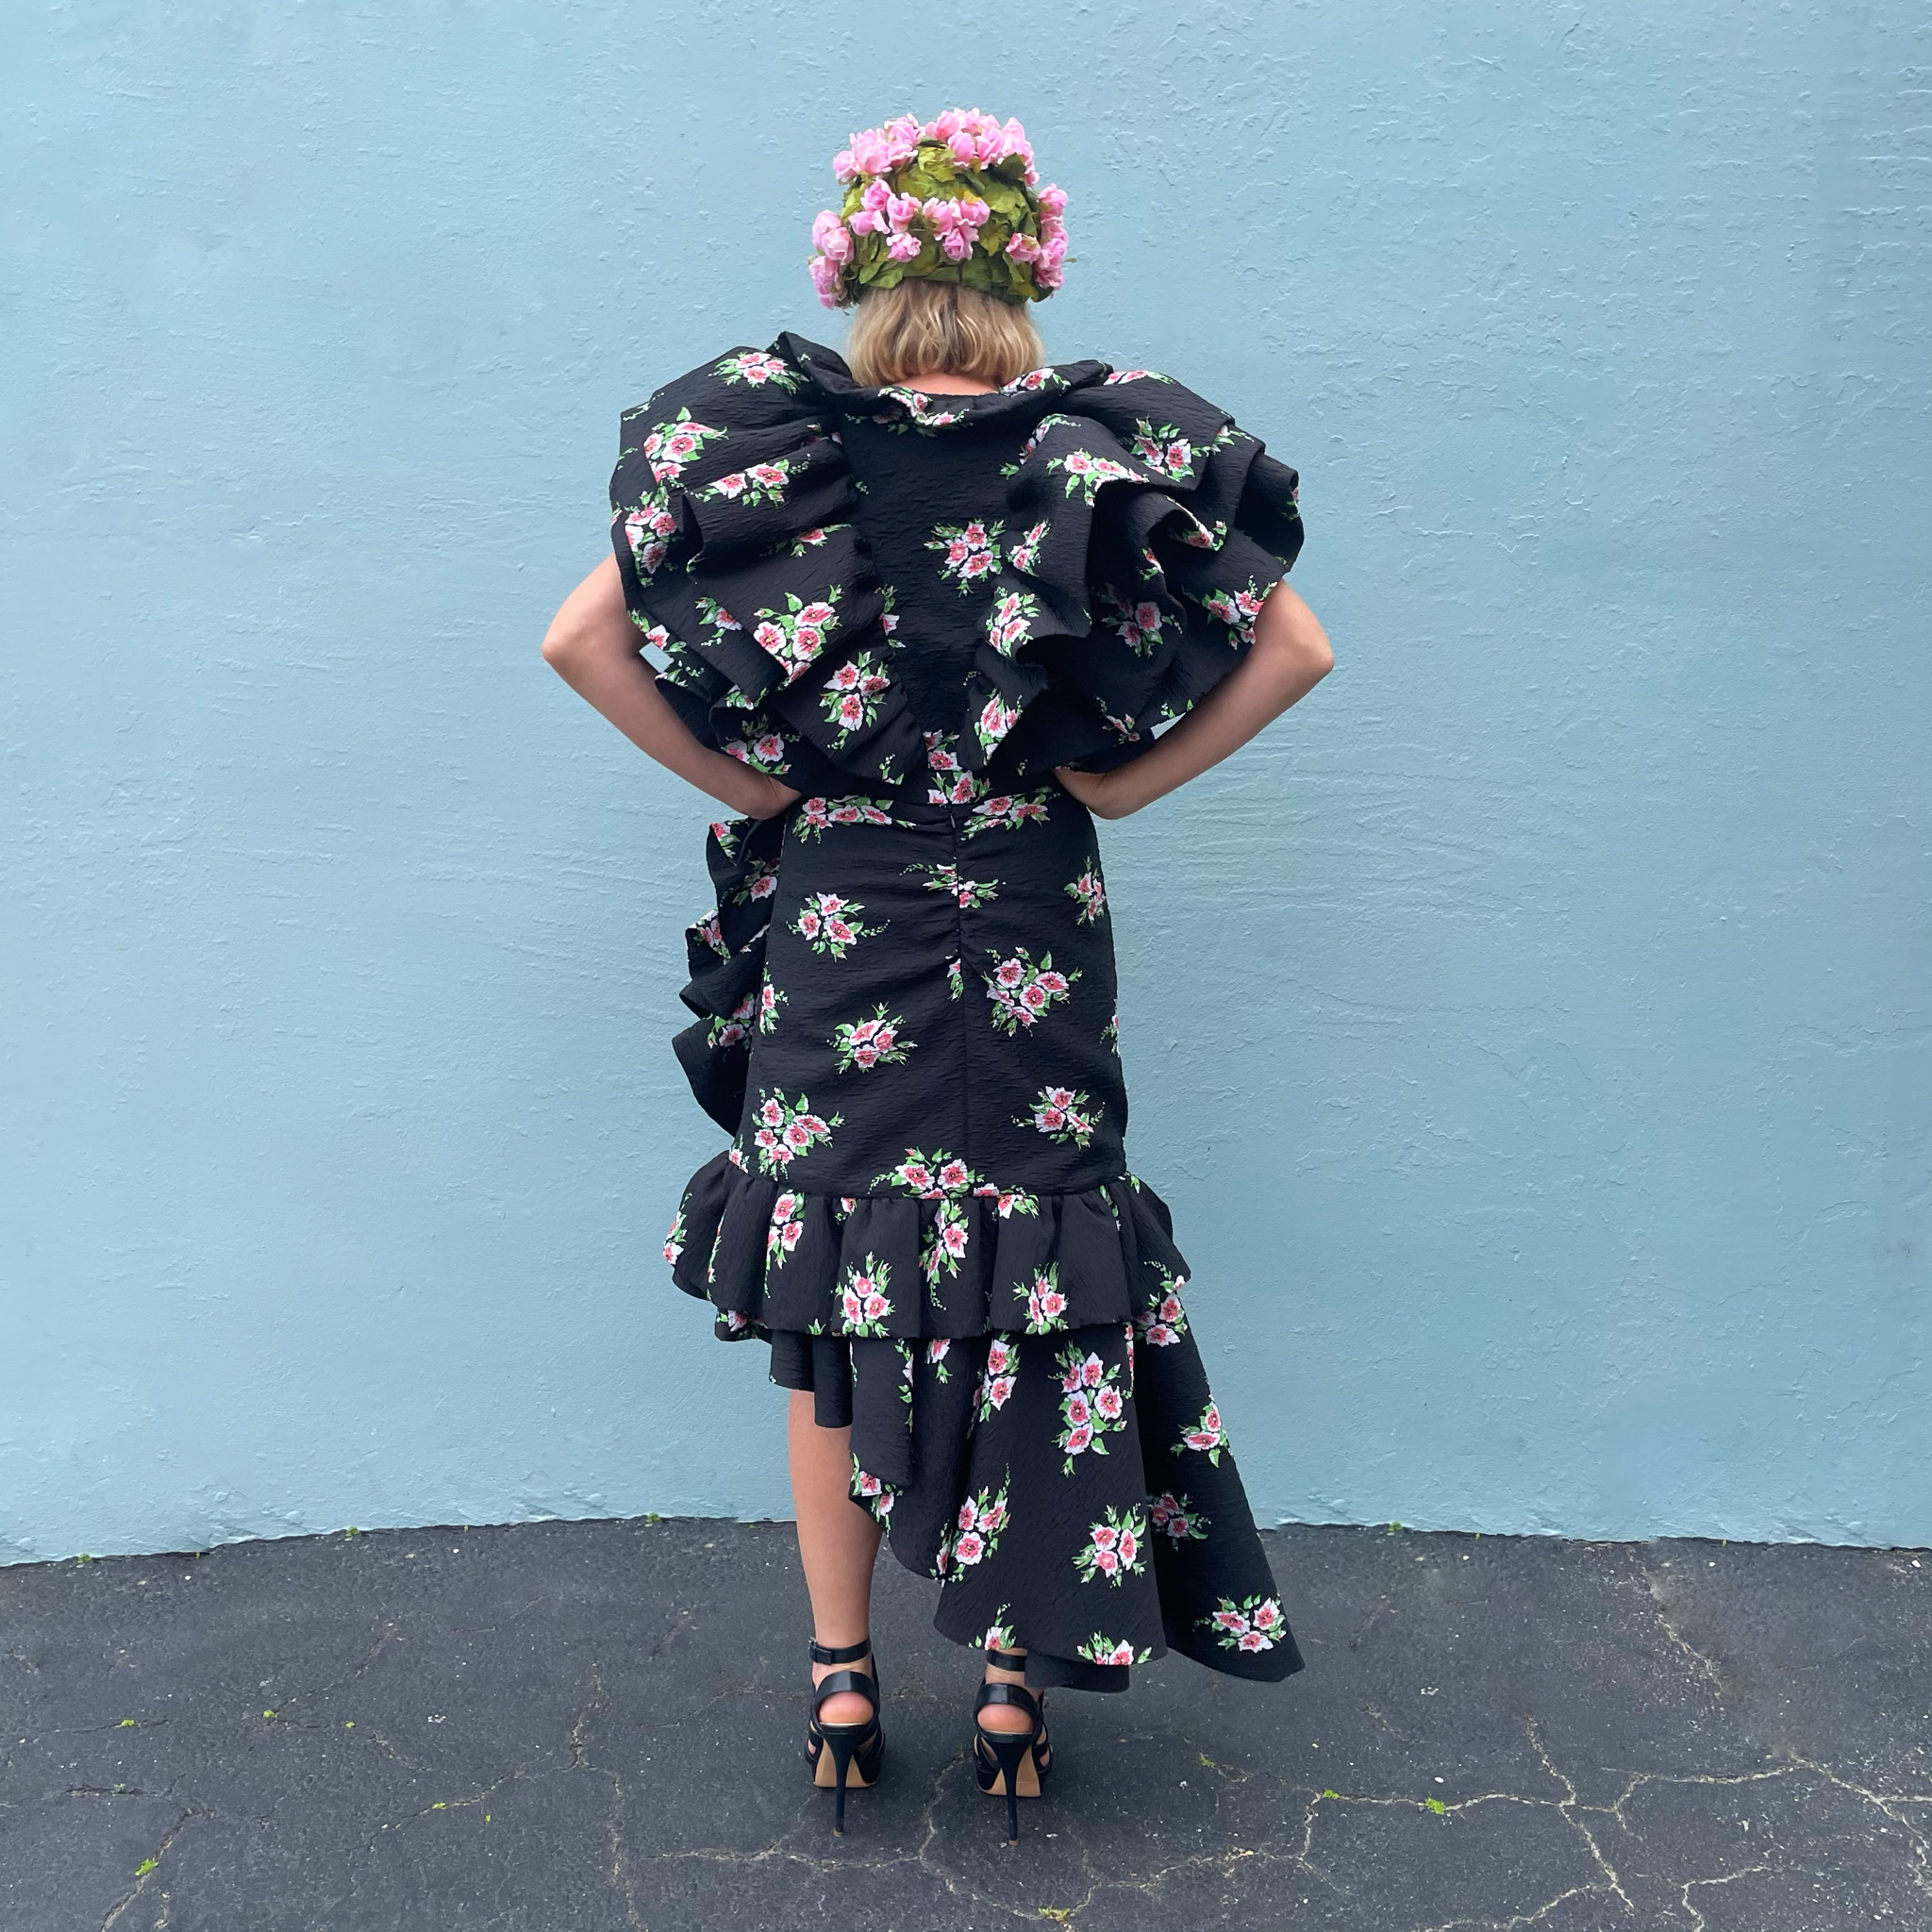 Rodarte Black Floral Ruffle Skirt Set